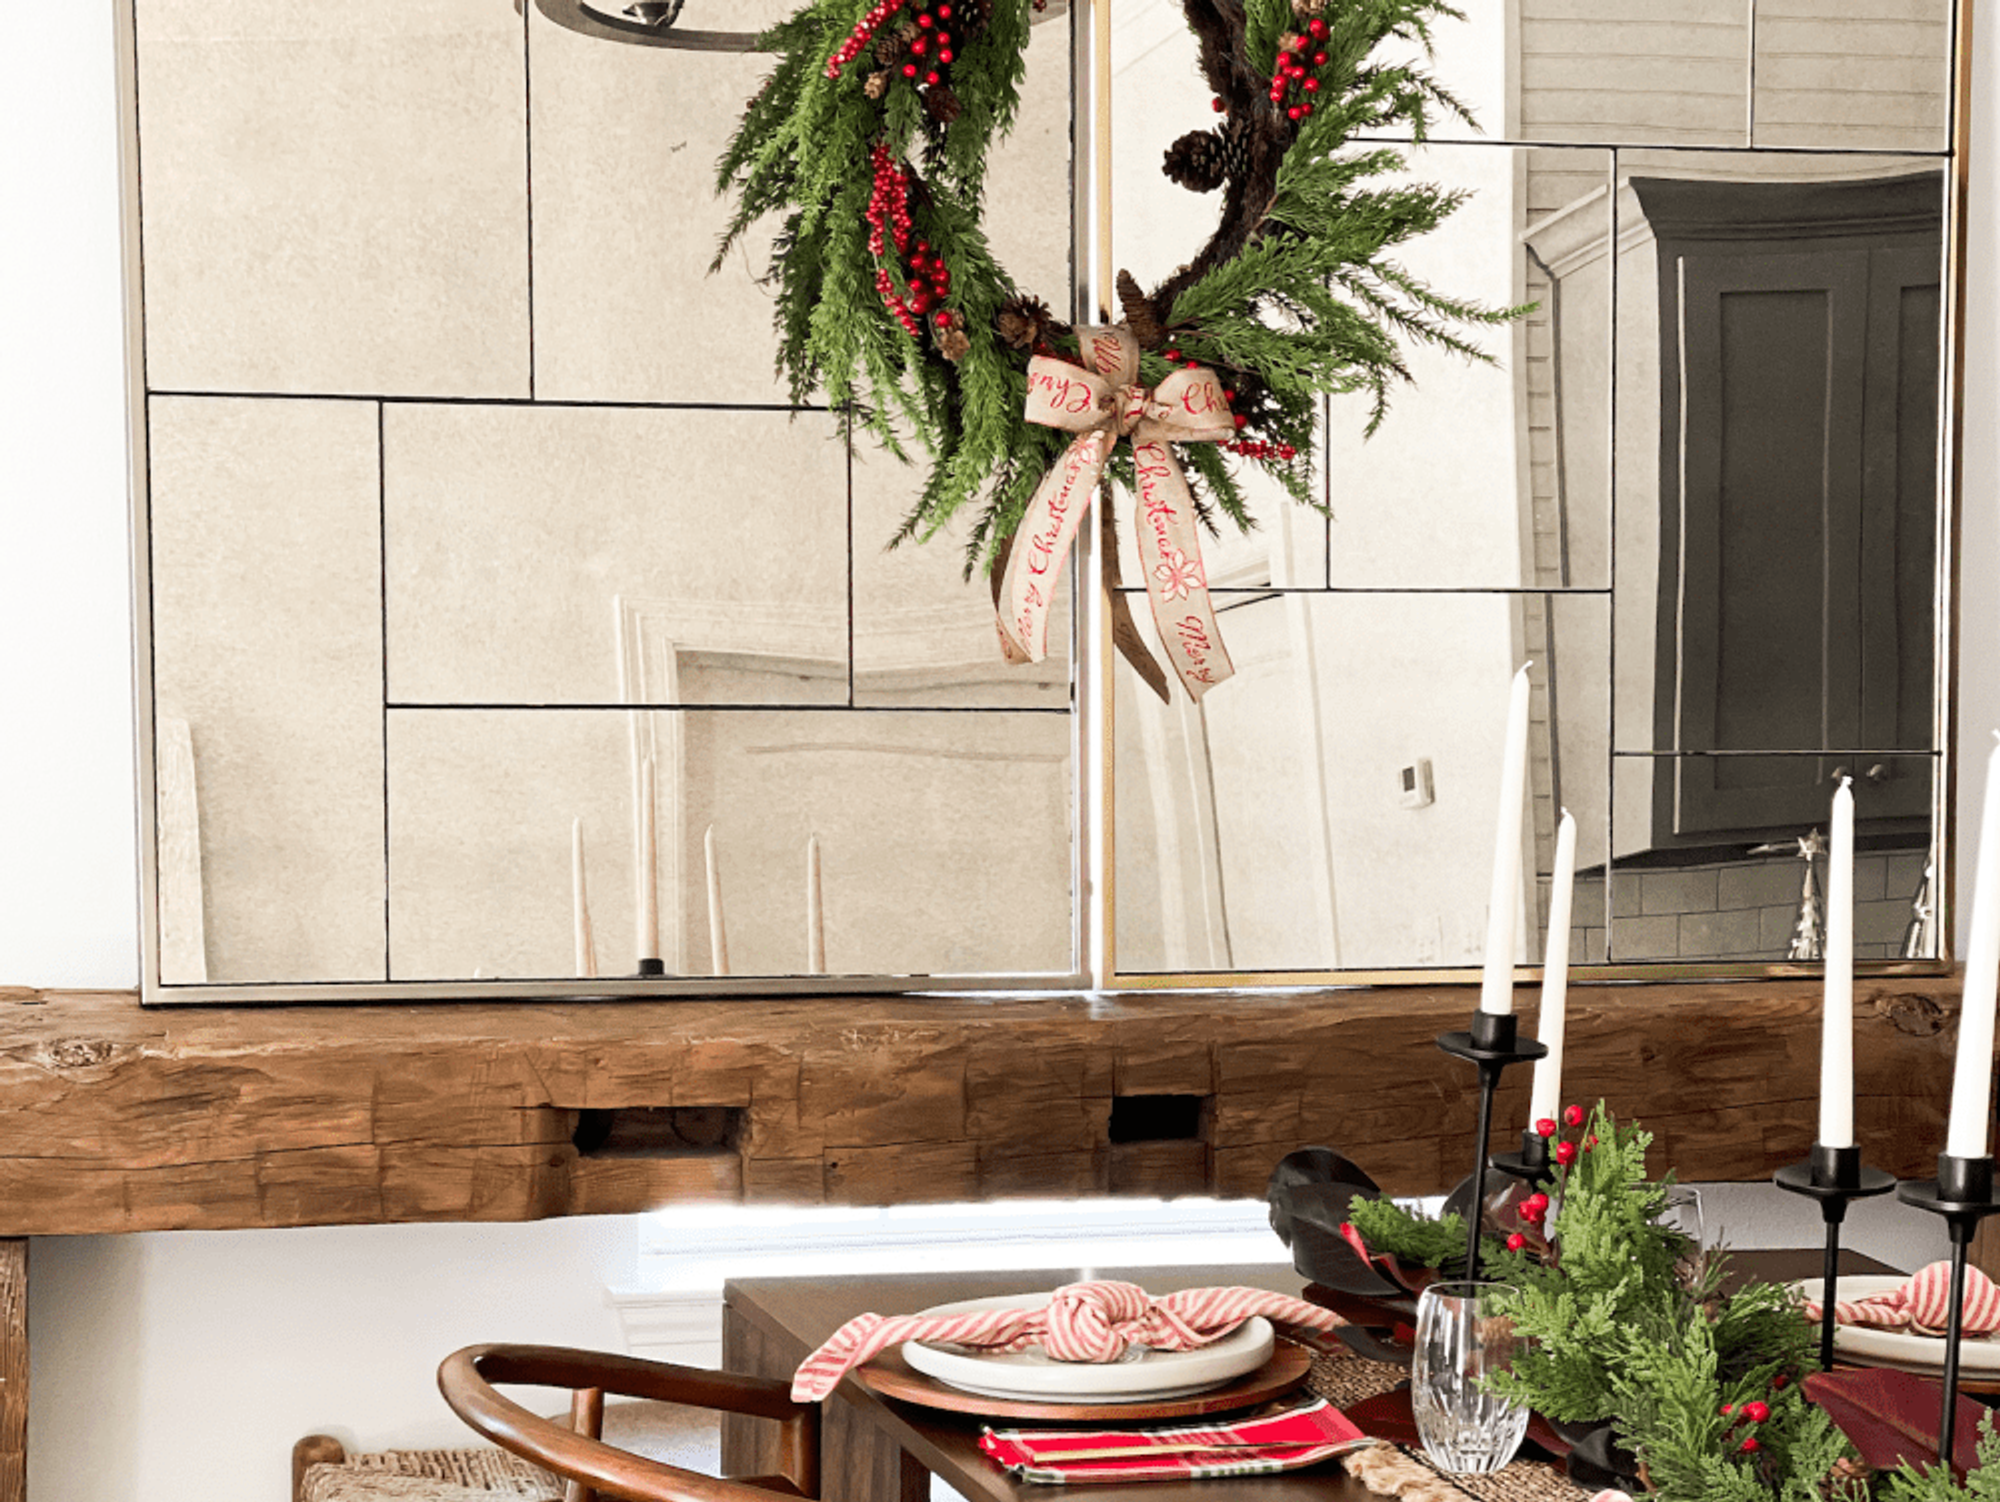 Adding wreaths makes a home feel festive.